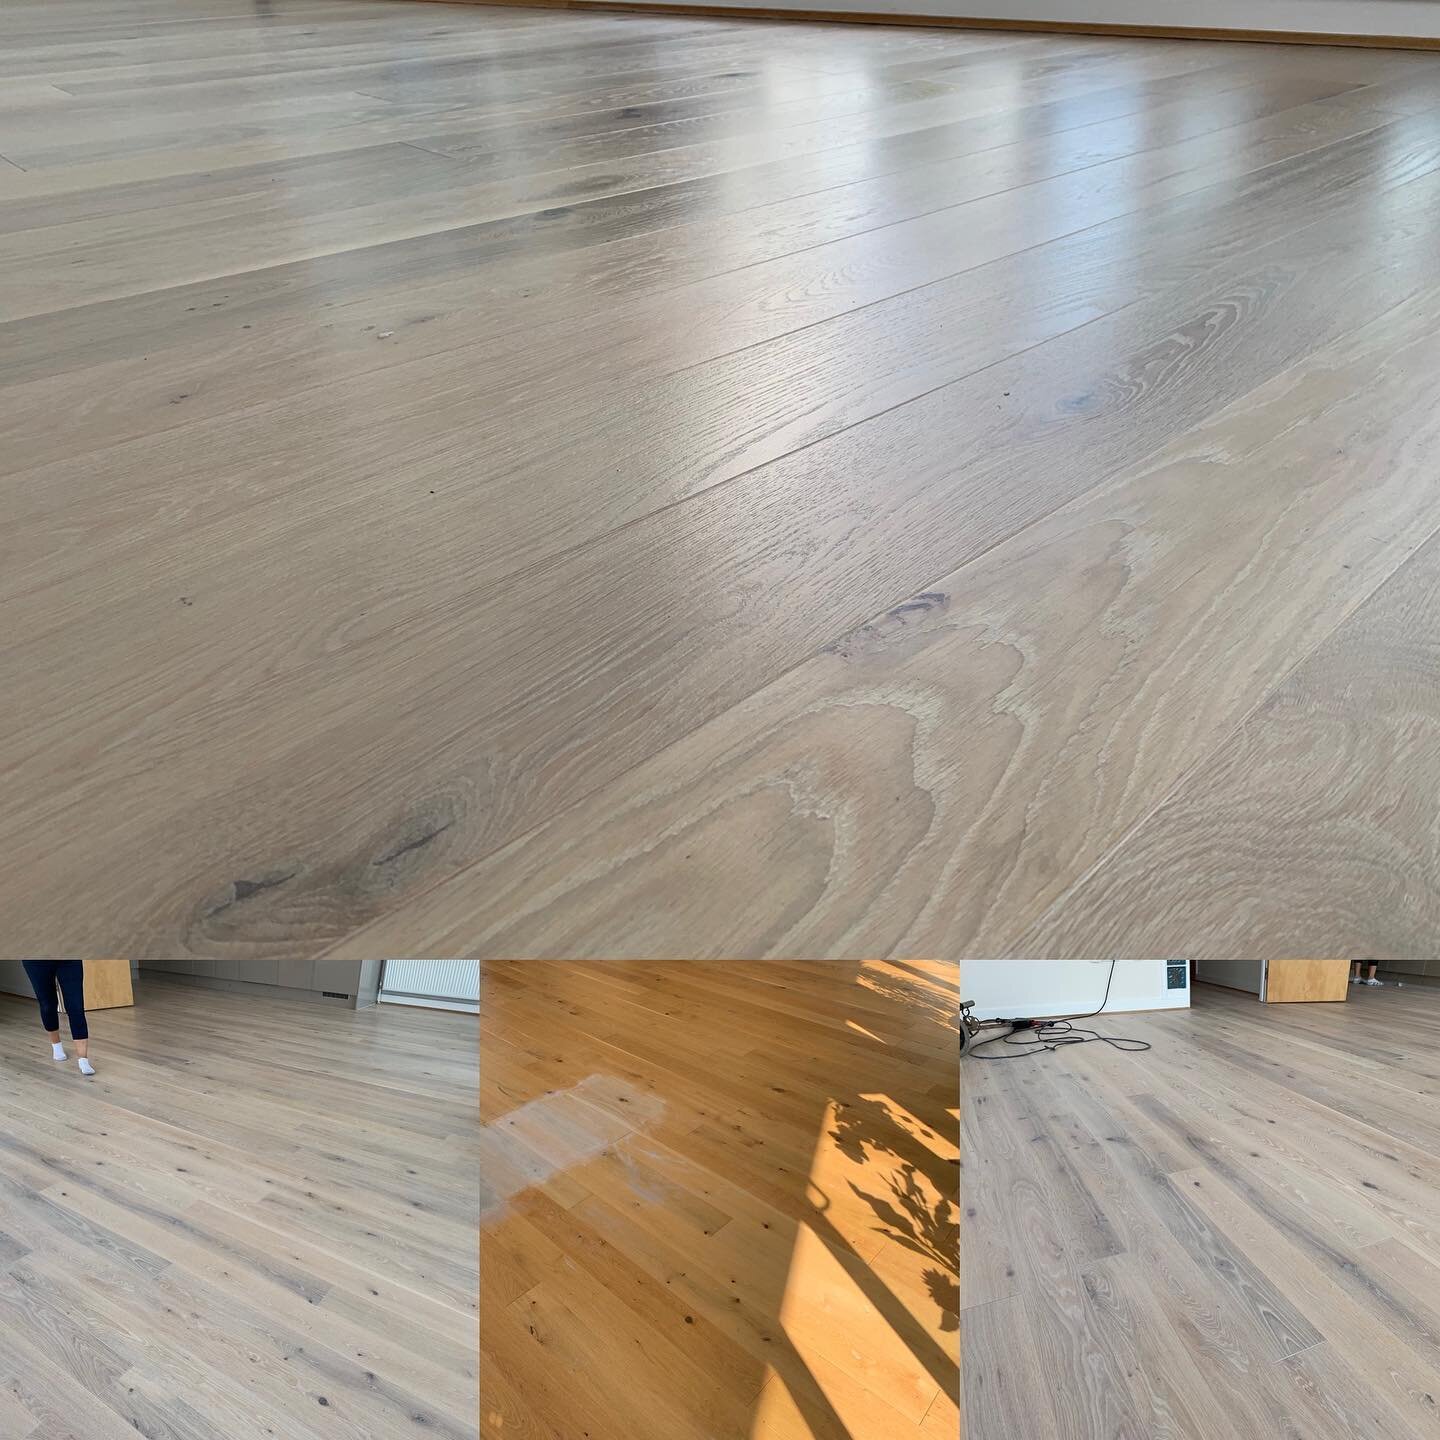 #floorsanding #worktops #lagler #festool #deros #mirka #bonapowerdrive #restoration #portsmouth #isleofwight #woodfloors #sanding #floorboards #pine #varnish #floorcrafter #bona #berger_seidle #matt.